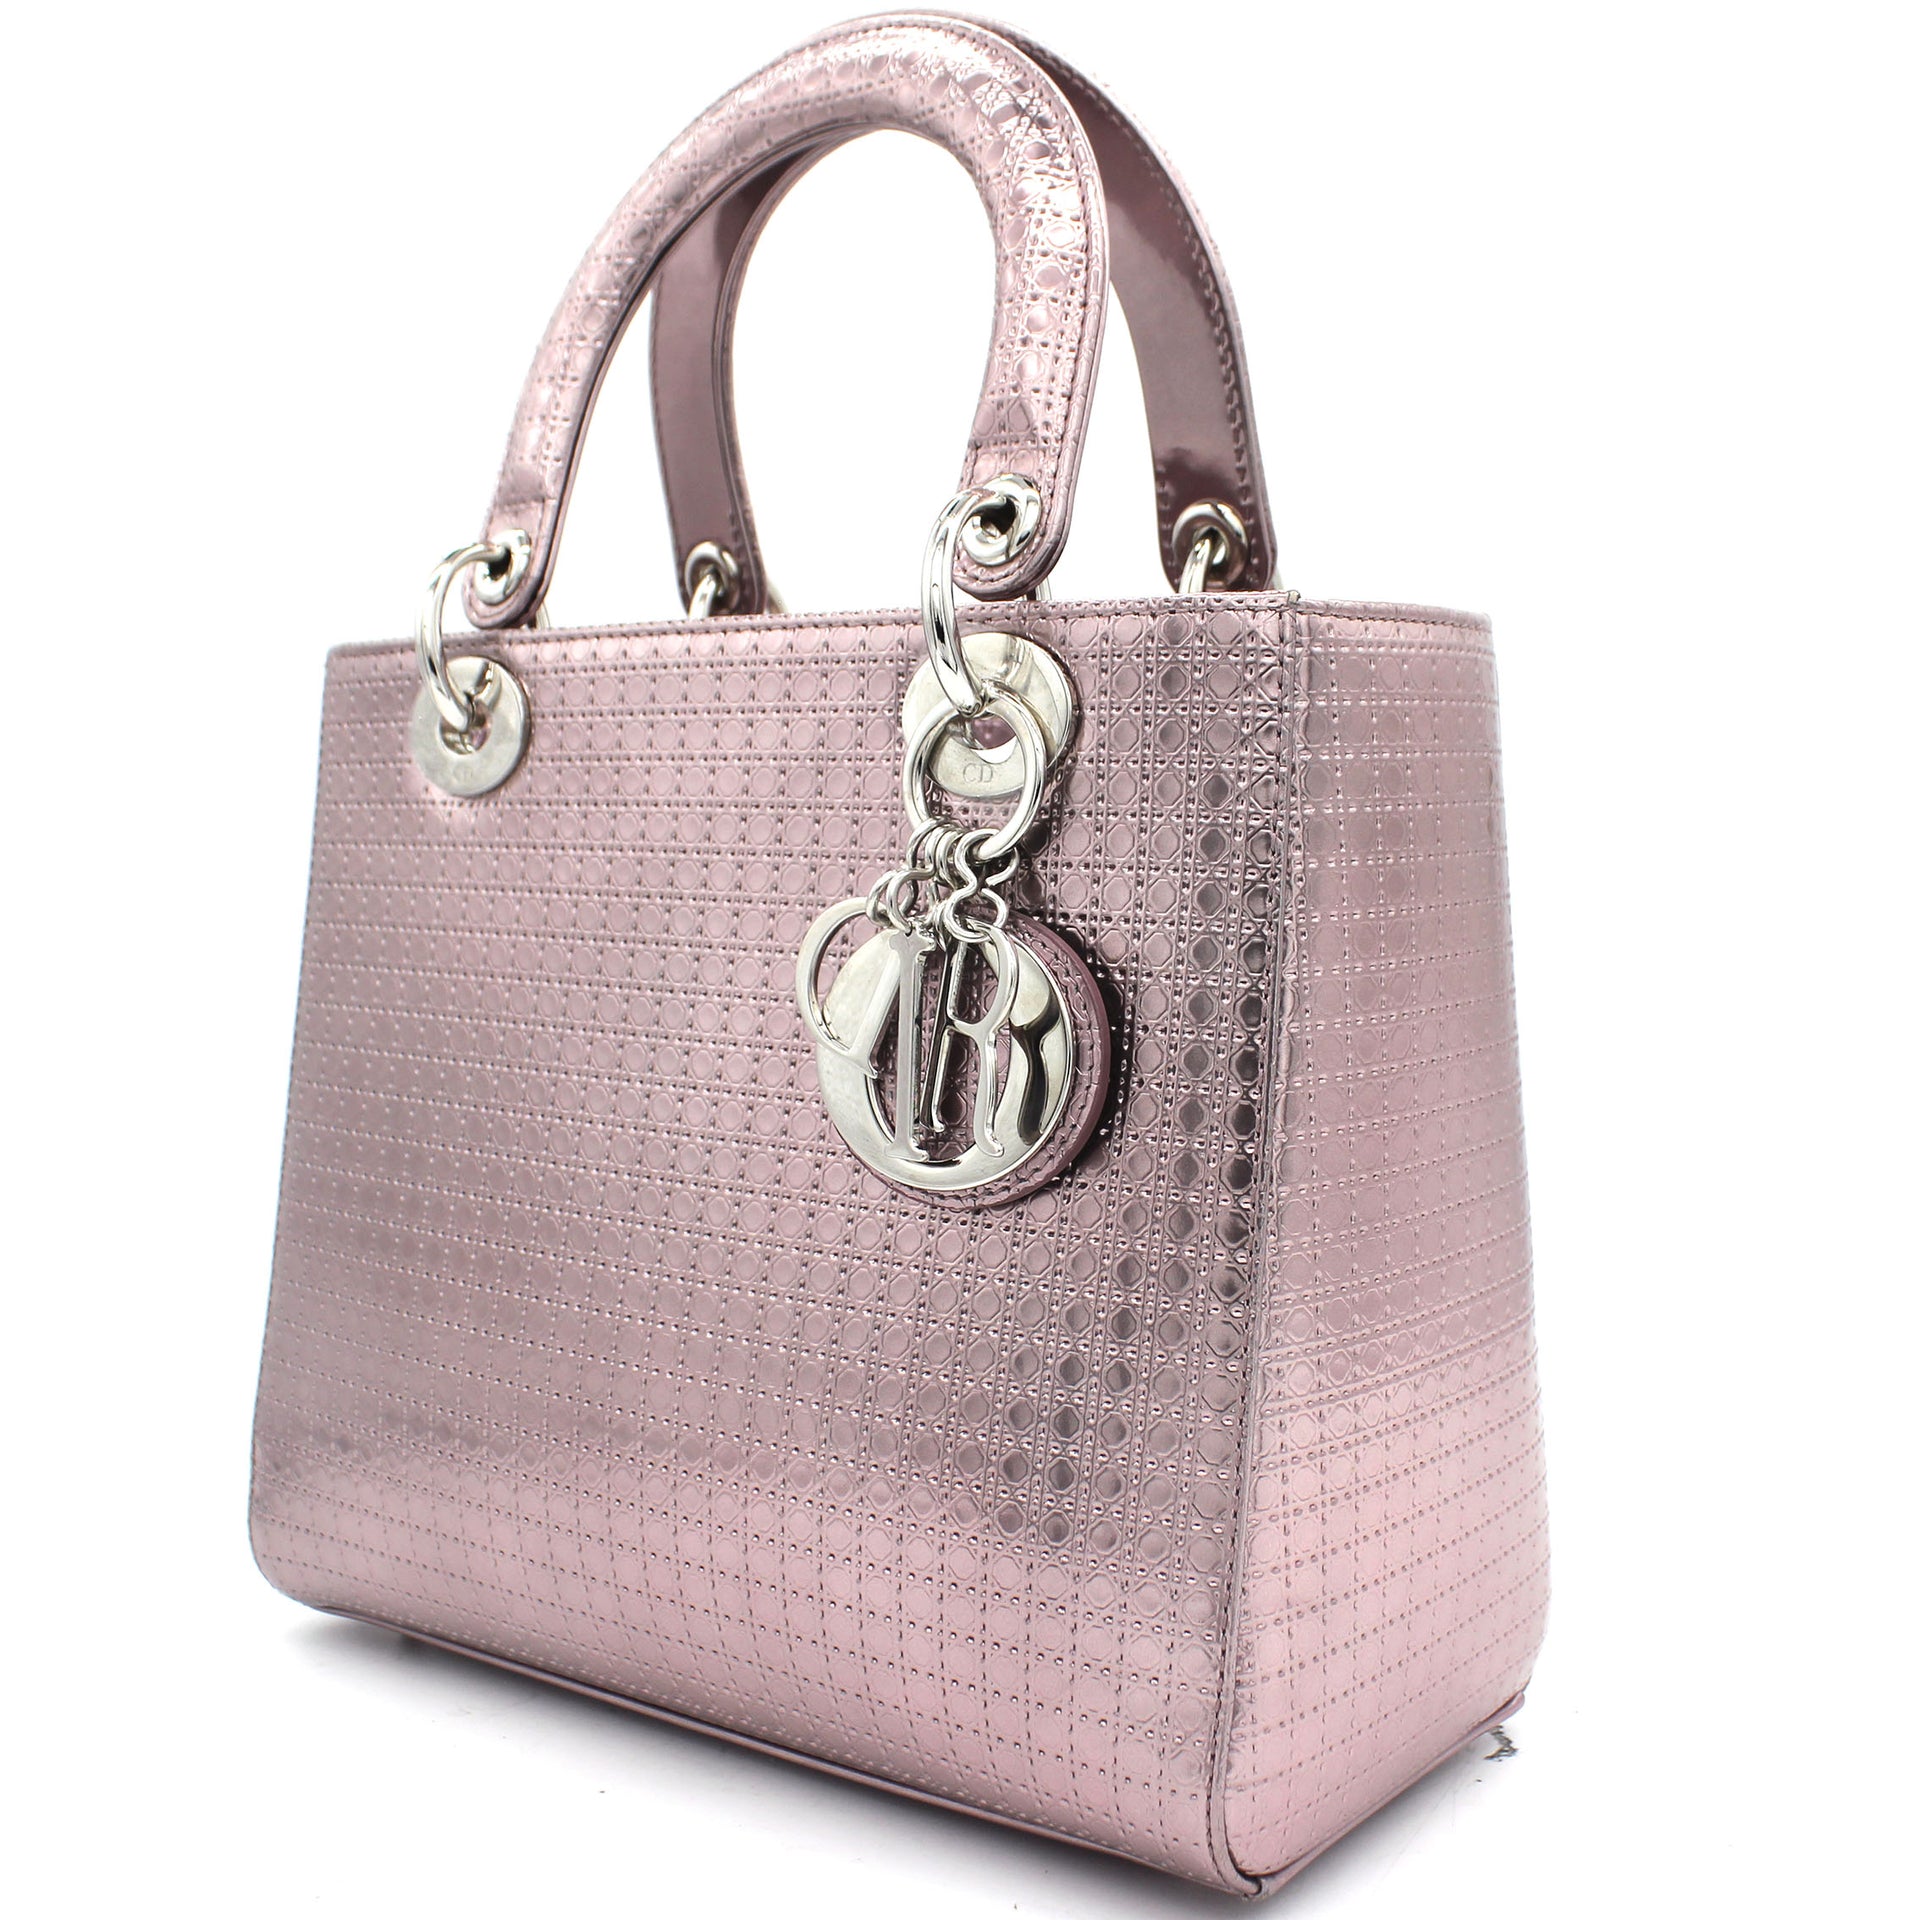 Metallic Pink Microcannage Leather Medium Lady Dior Tote